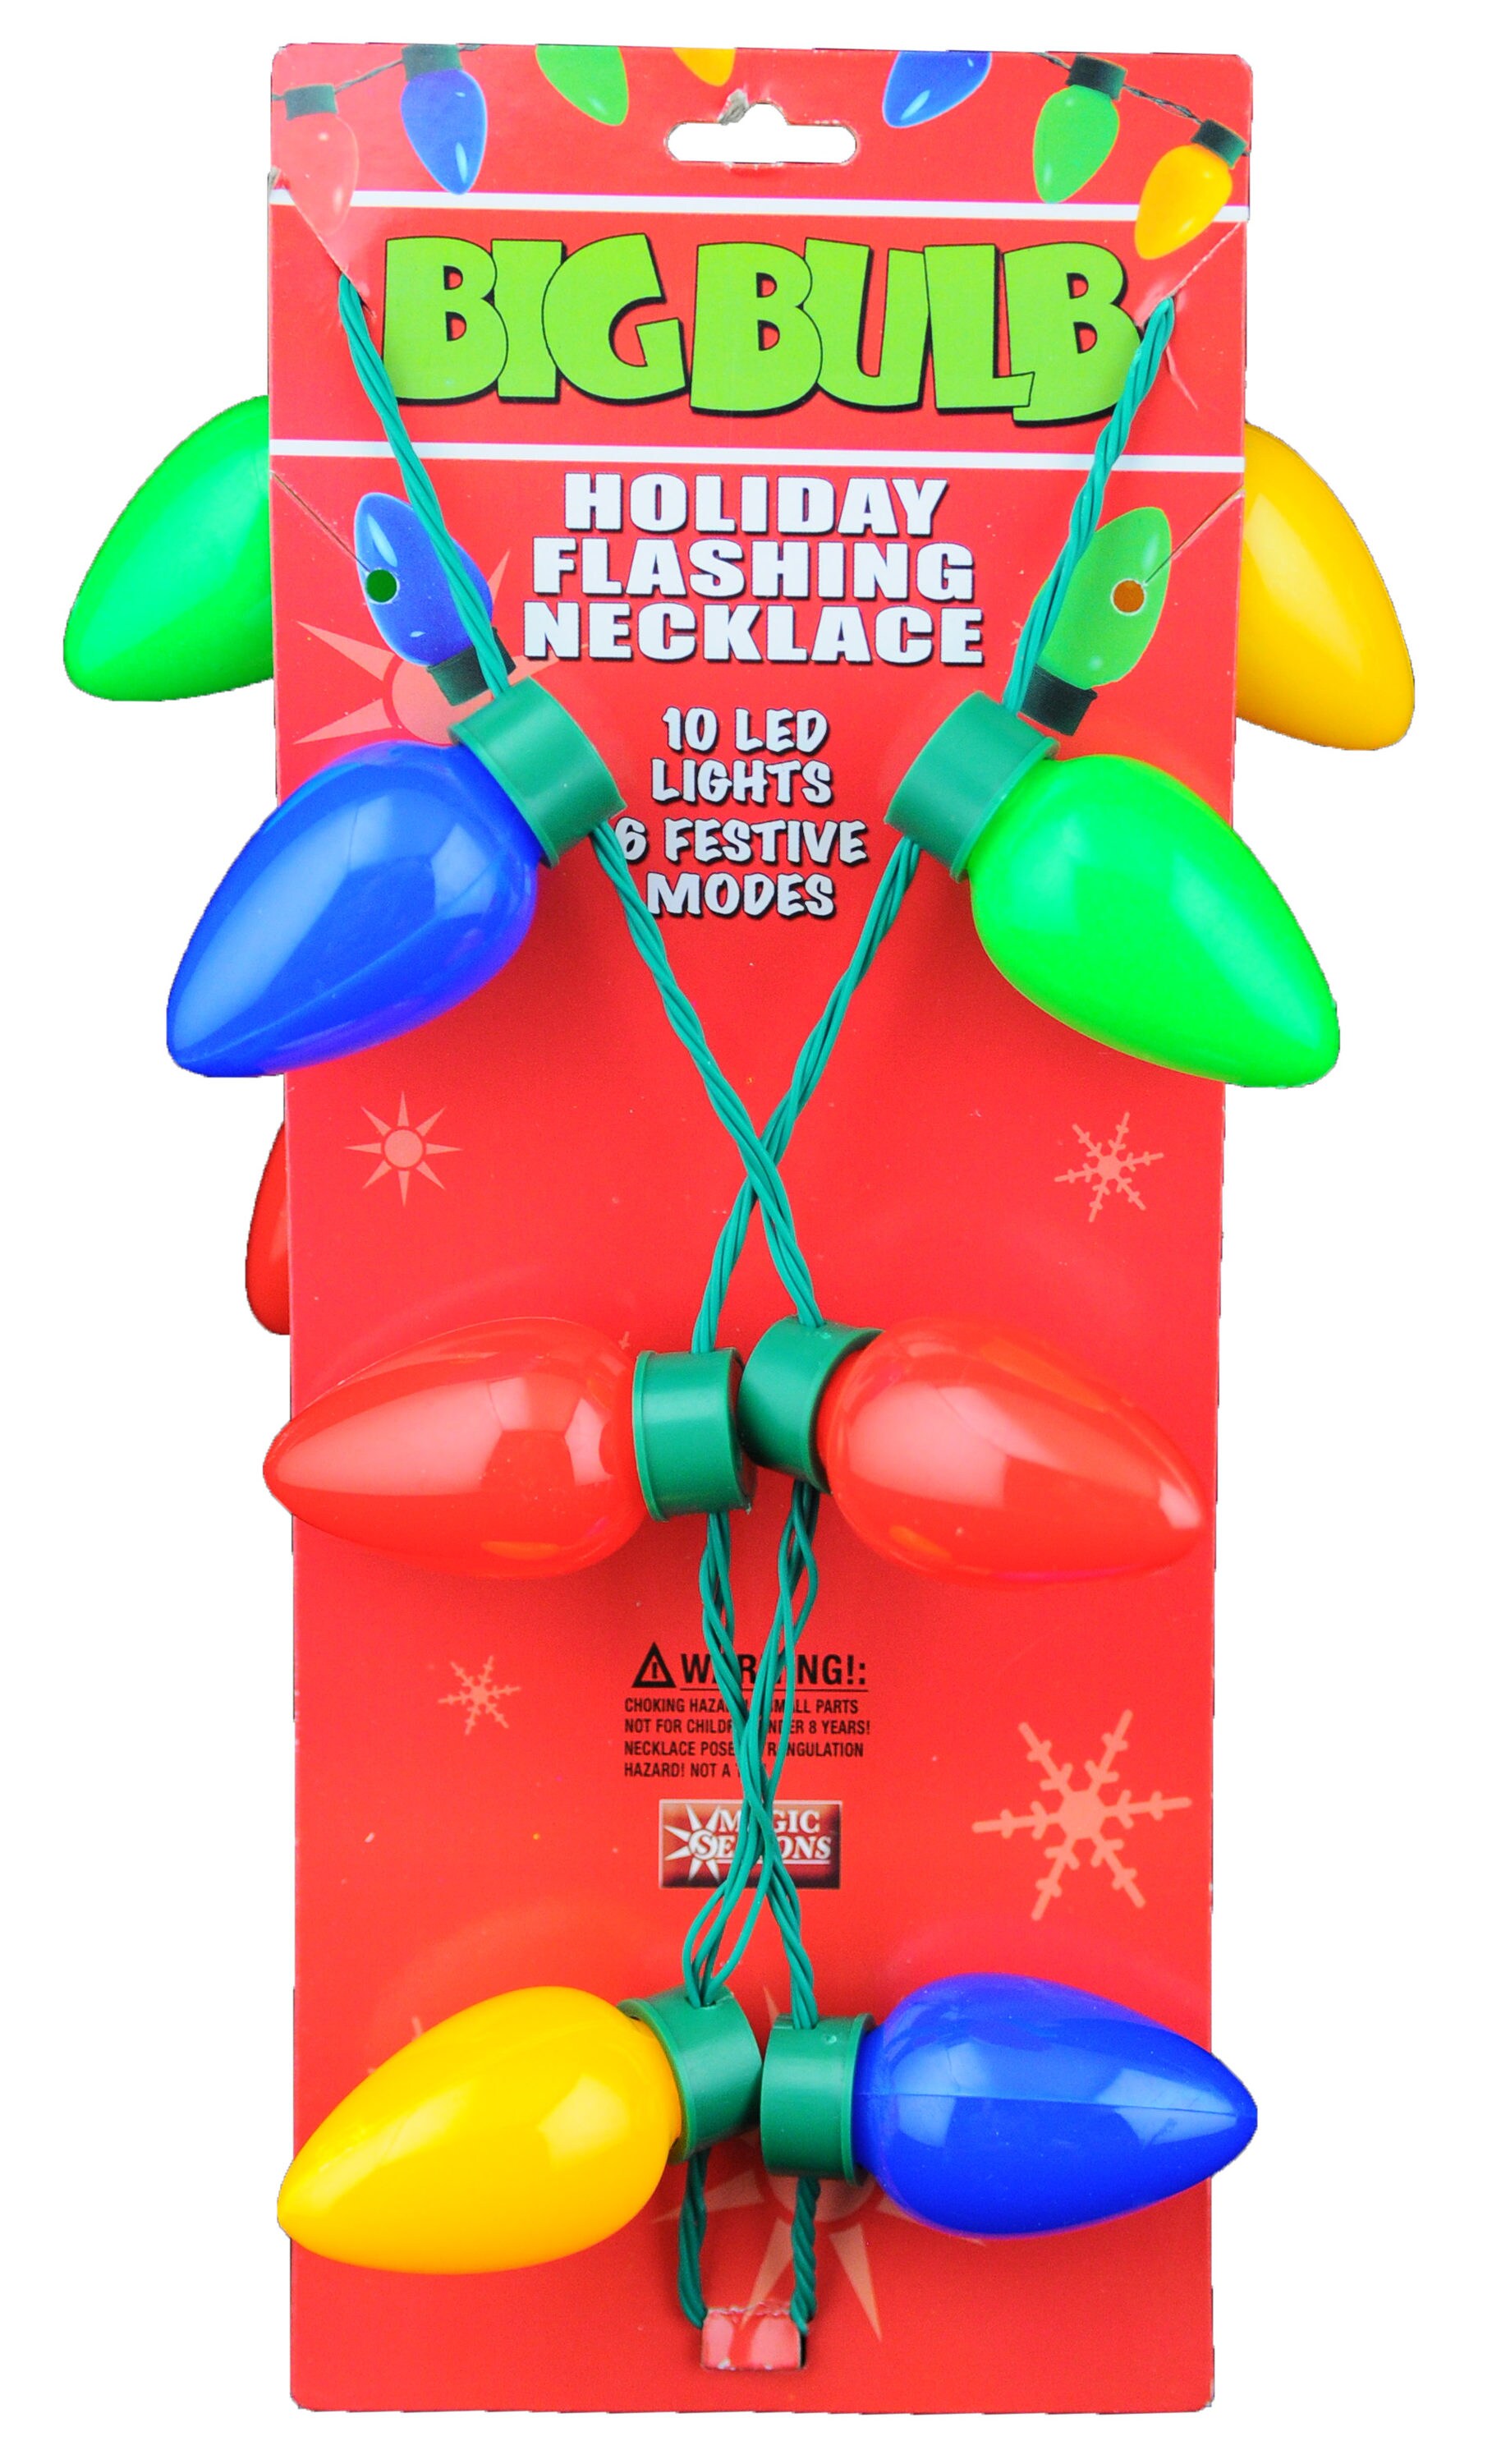 NEW Holiday Flashing Christmas Lights Necklace Big Bulb 10 LED 6 Modes 4 Colors 